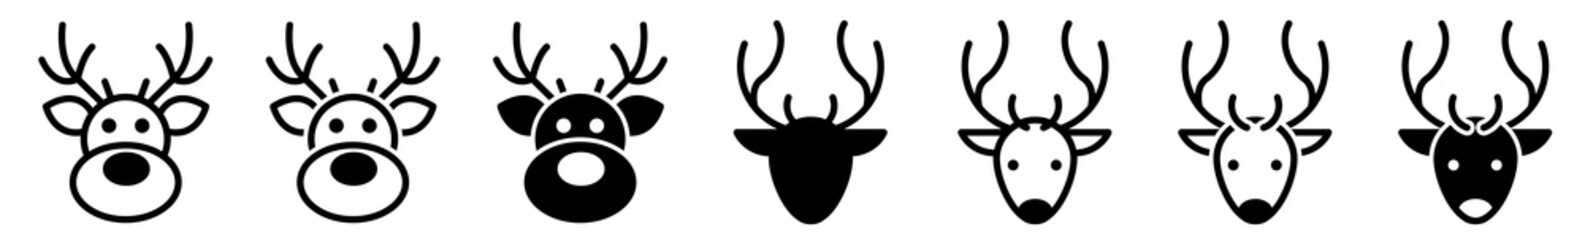 Reindeer Icon Set | Reindeers Vector Illustration Logo | Christmas Reindeer Icons | X-MAS Isolated Collection